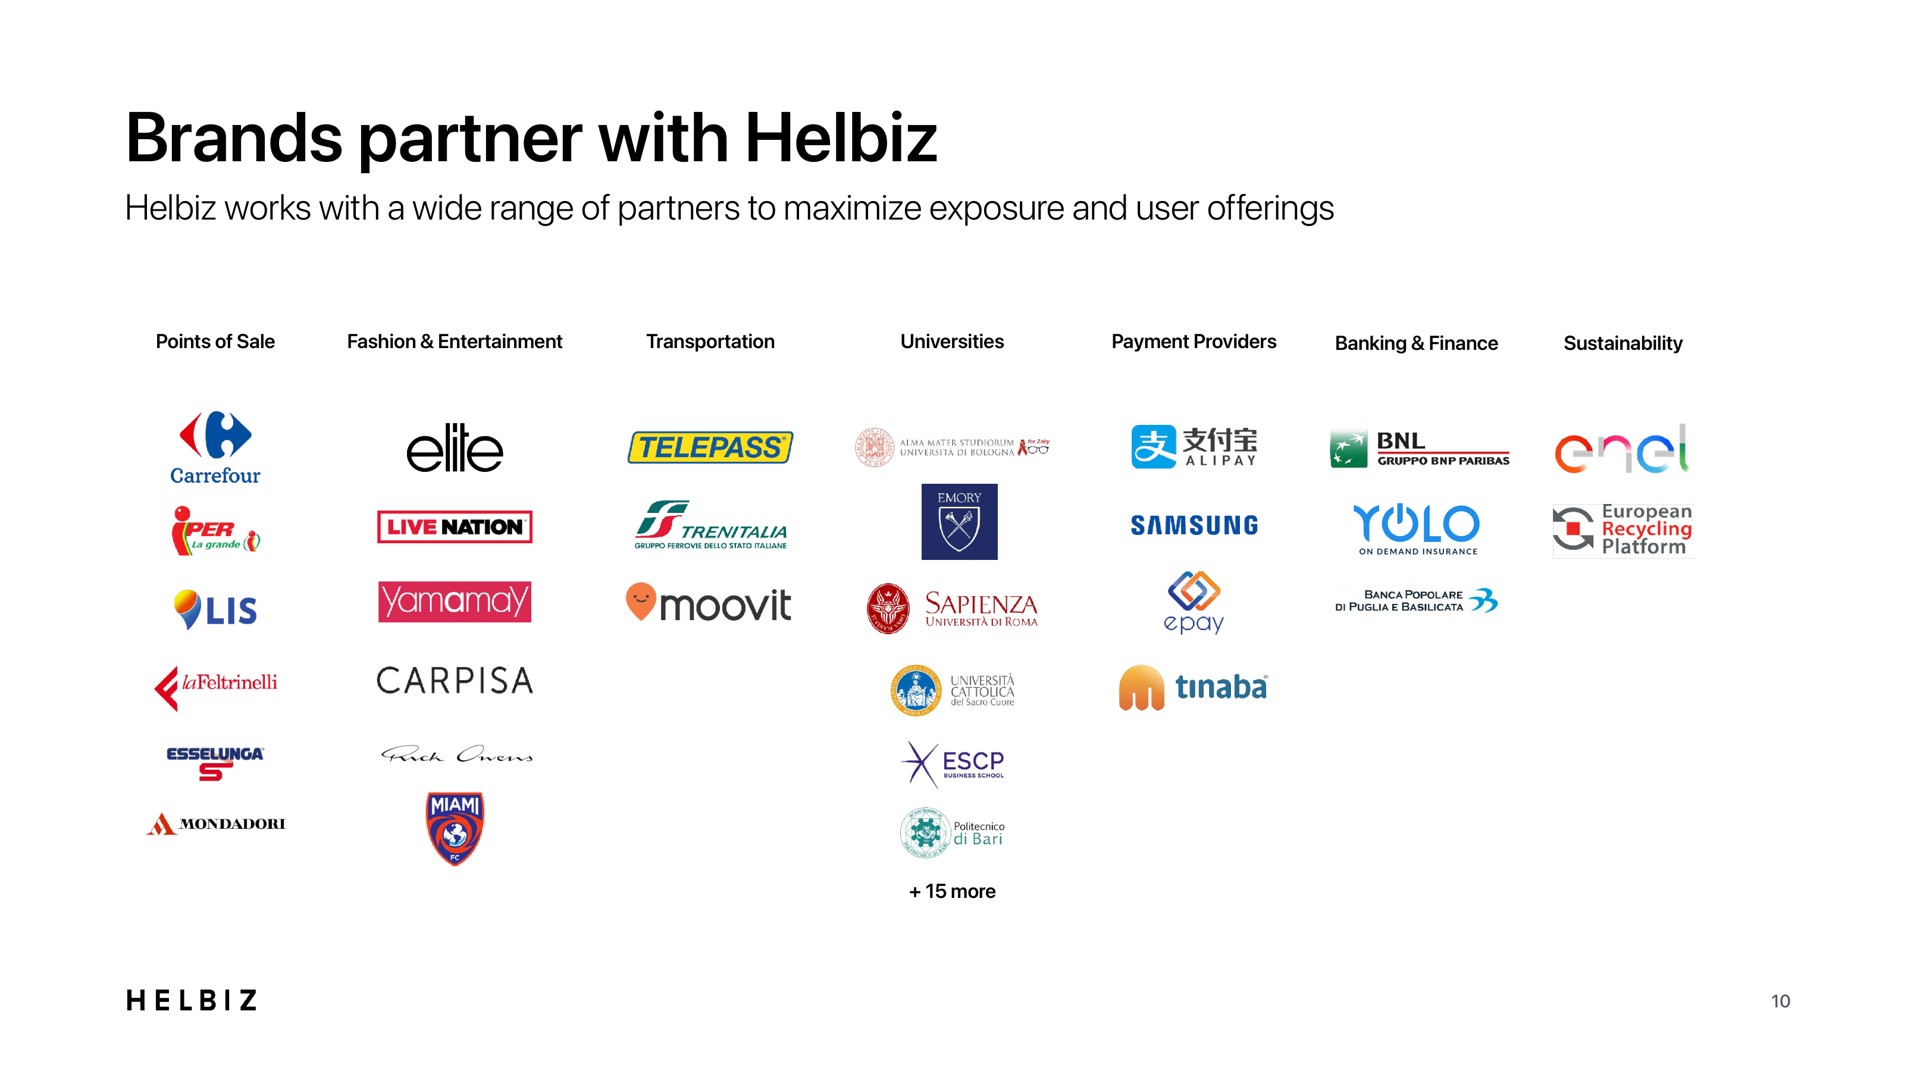 brands partner with lis | Helbiz